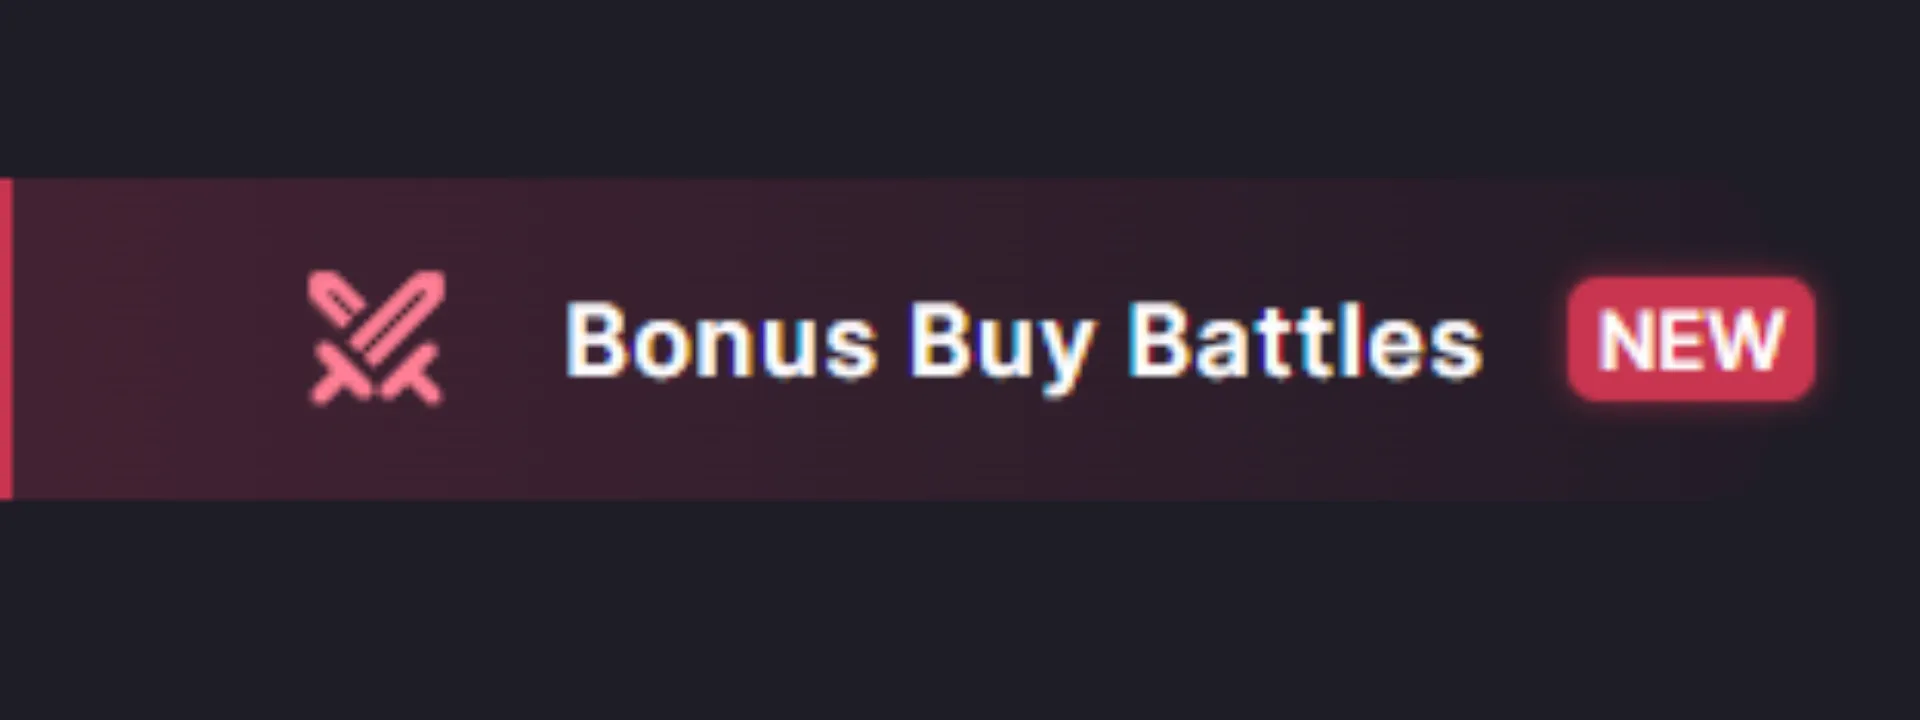 Bonus Buy Battles